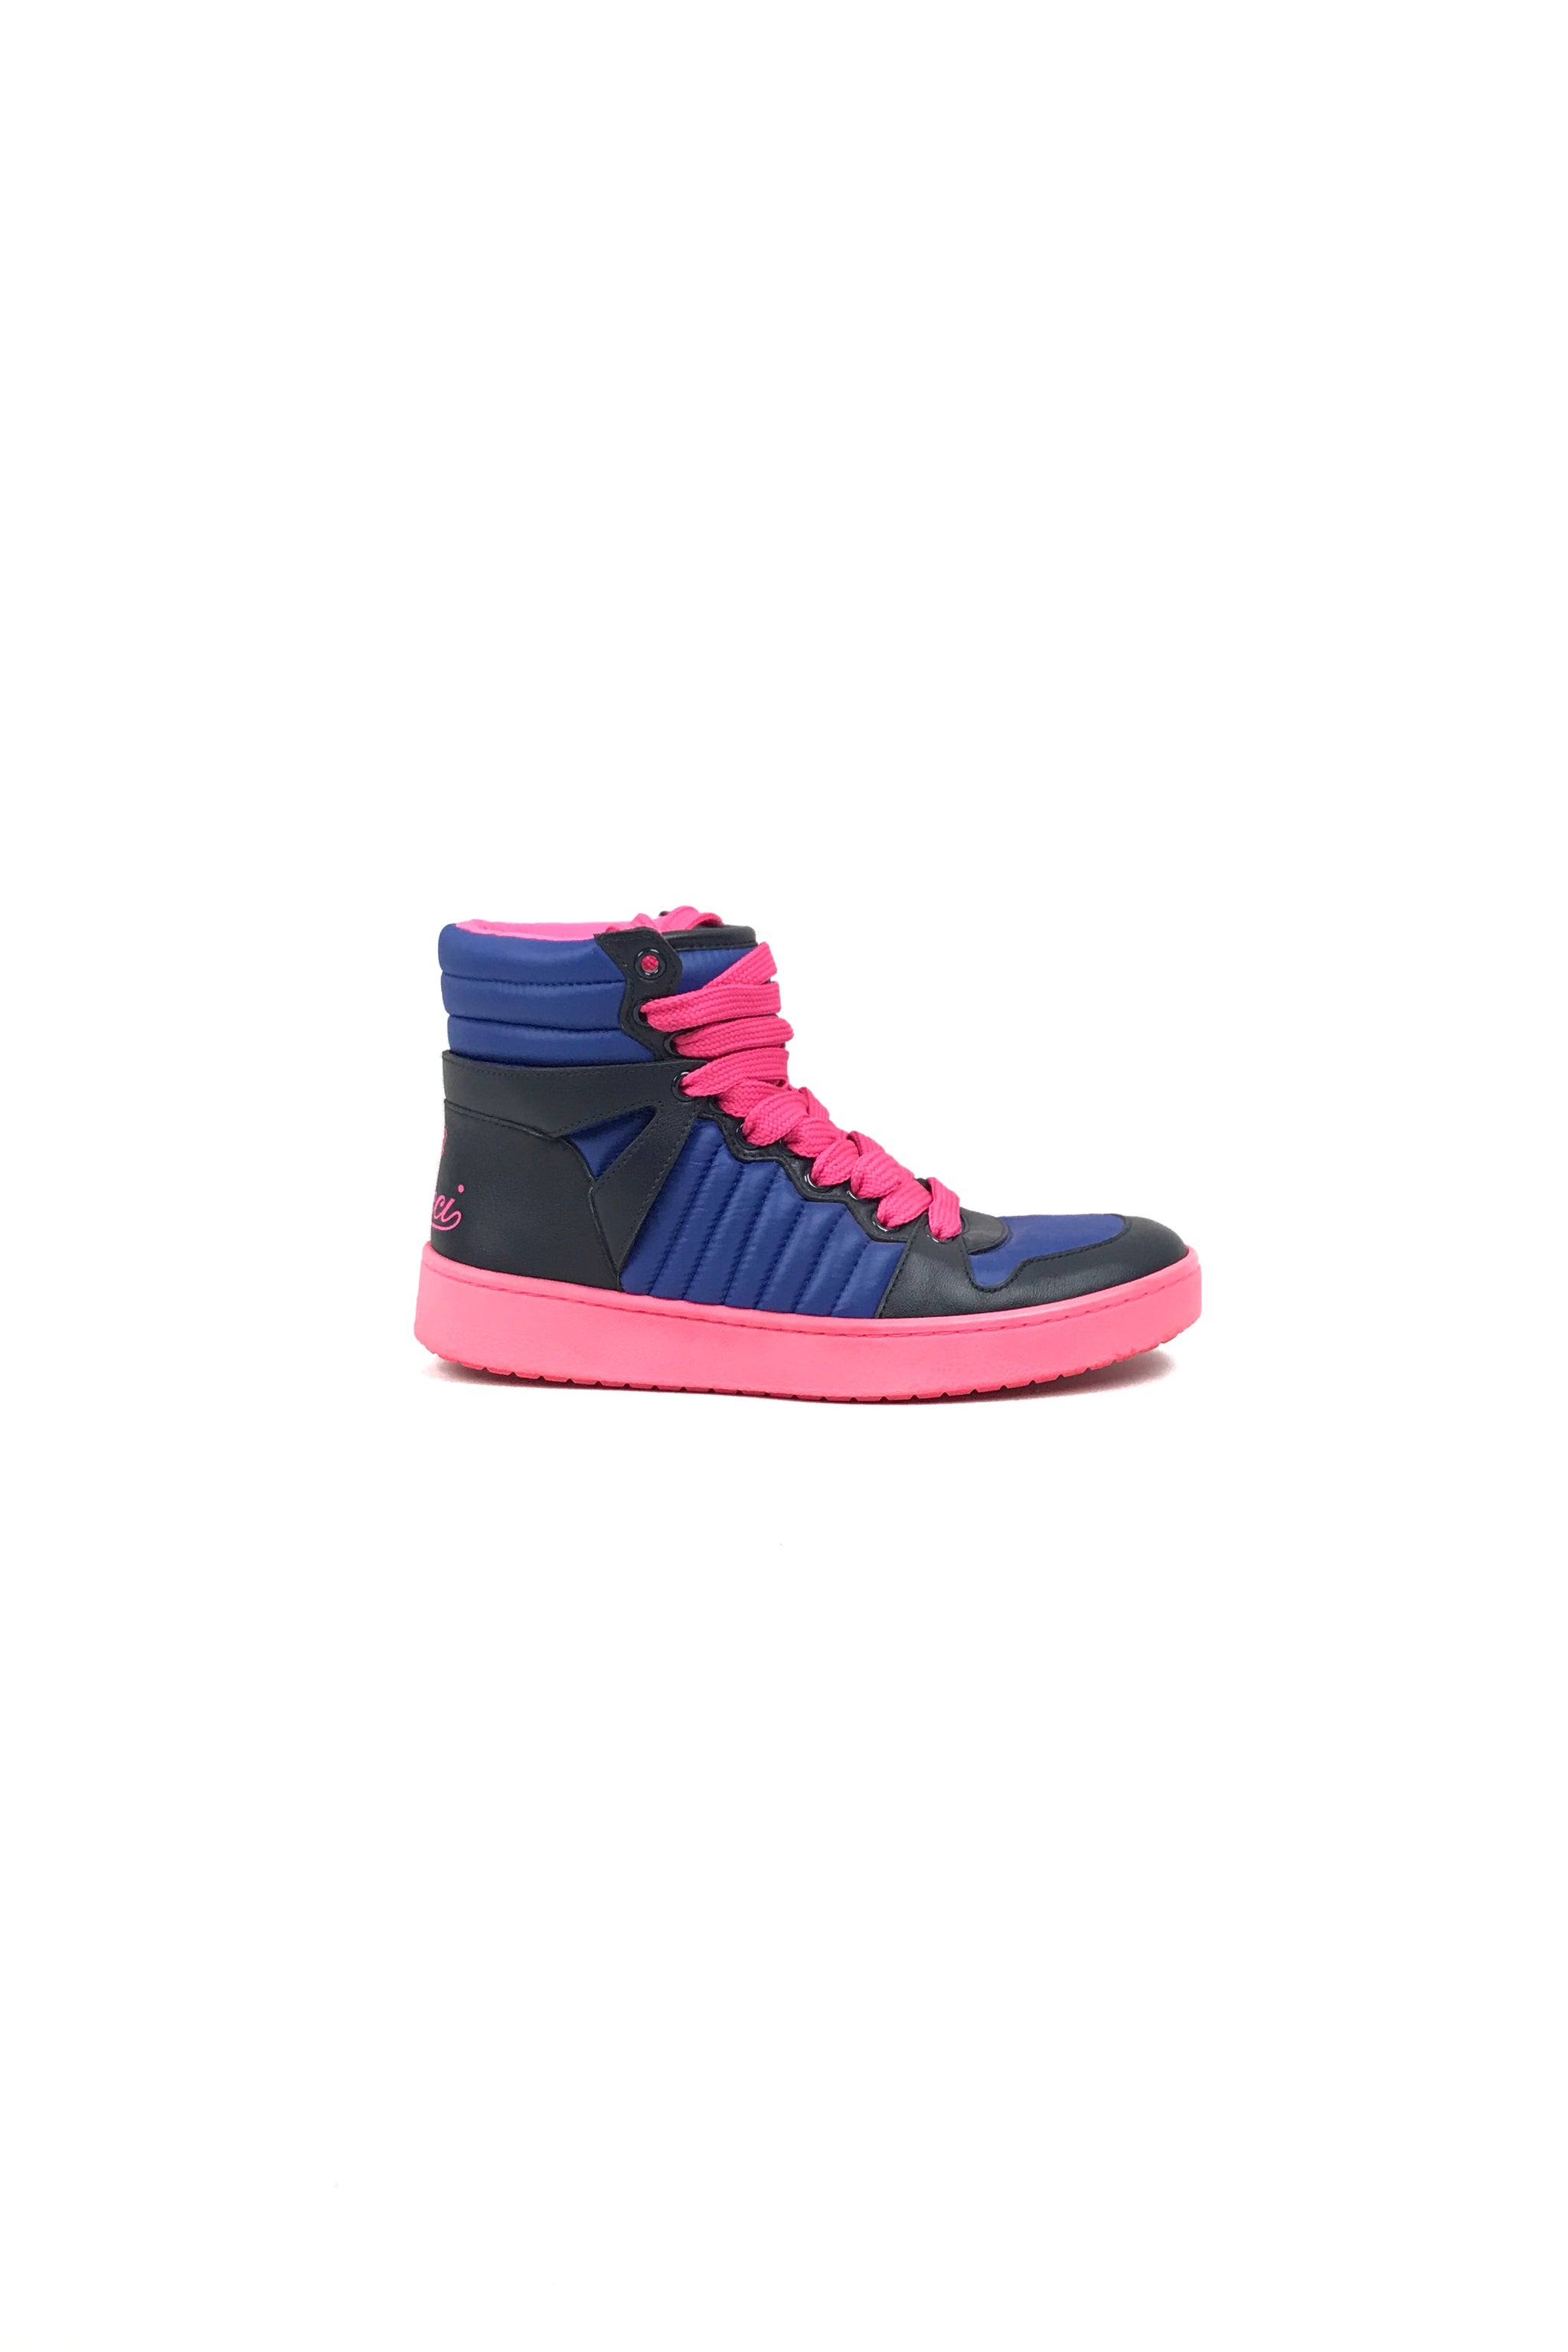 neon pink high top sneakers